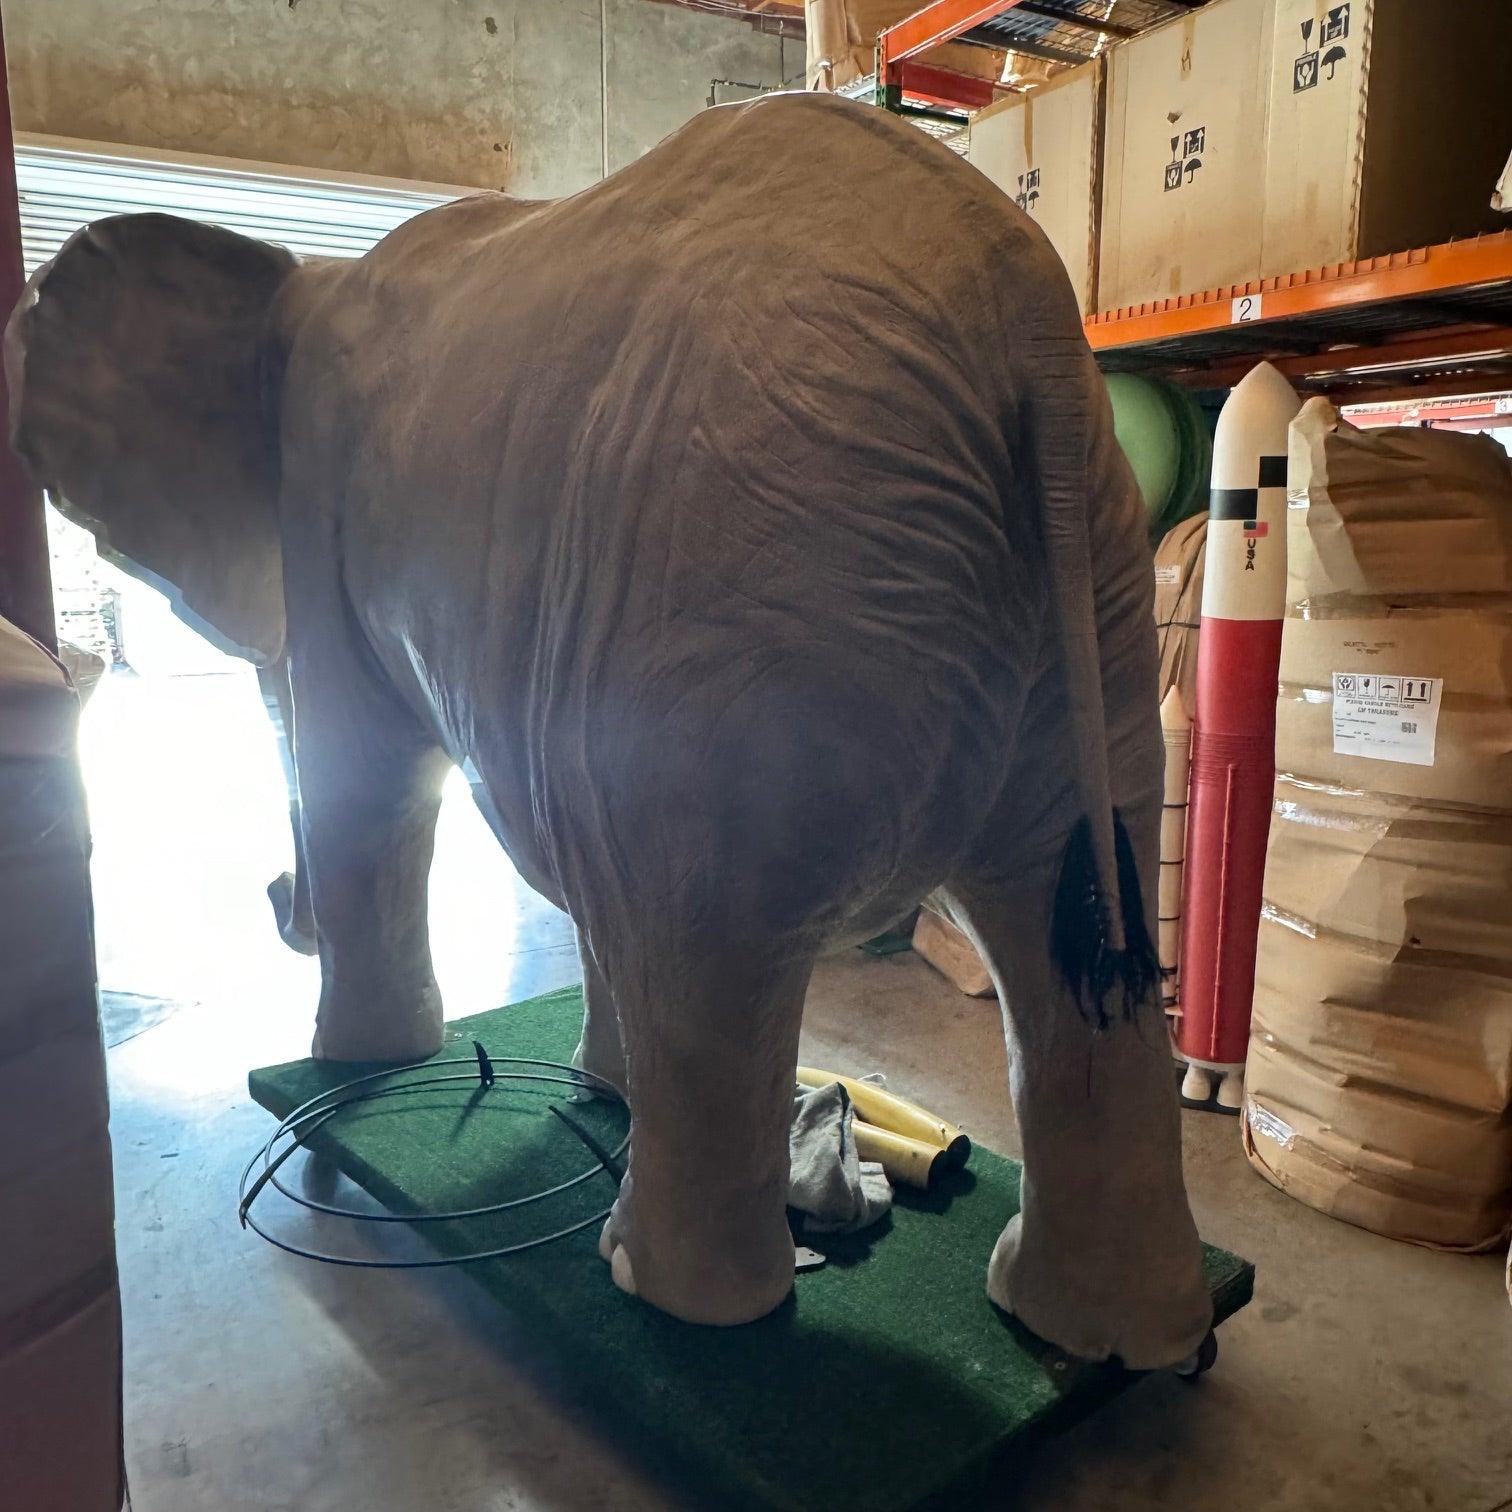 Life Size Standing Elephant Statue - LM Treasures Prop Rentals 